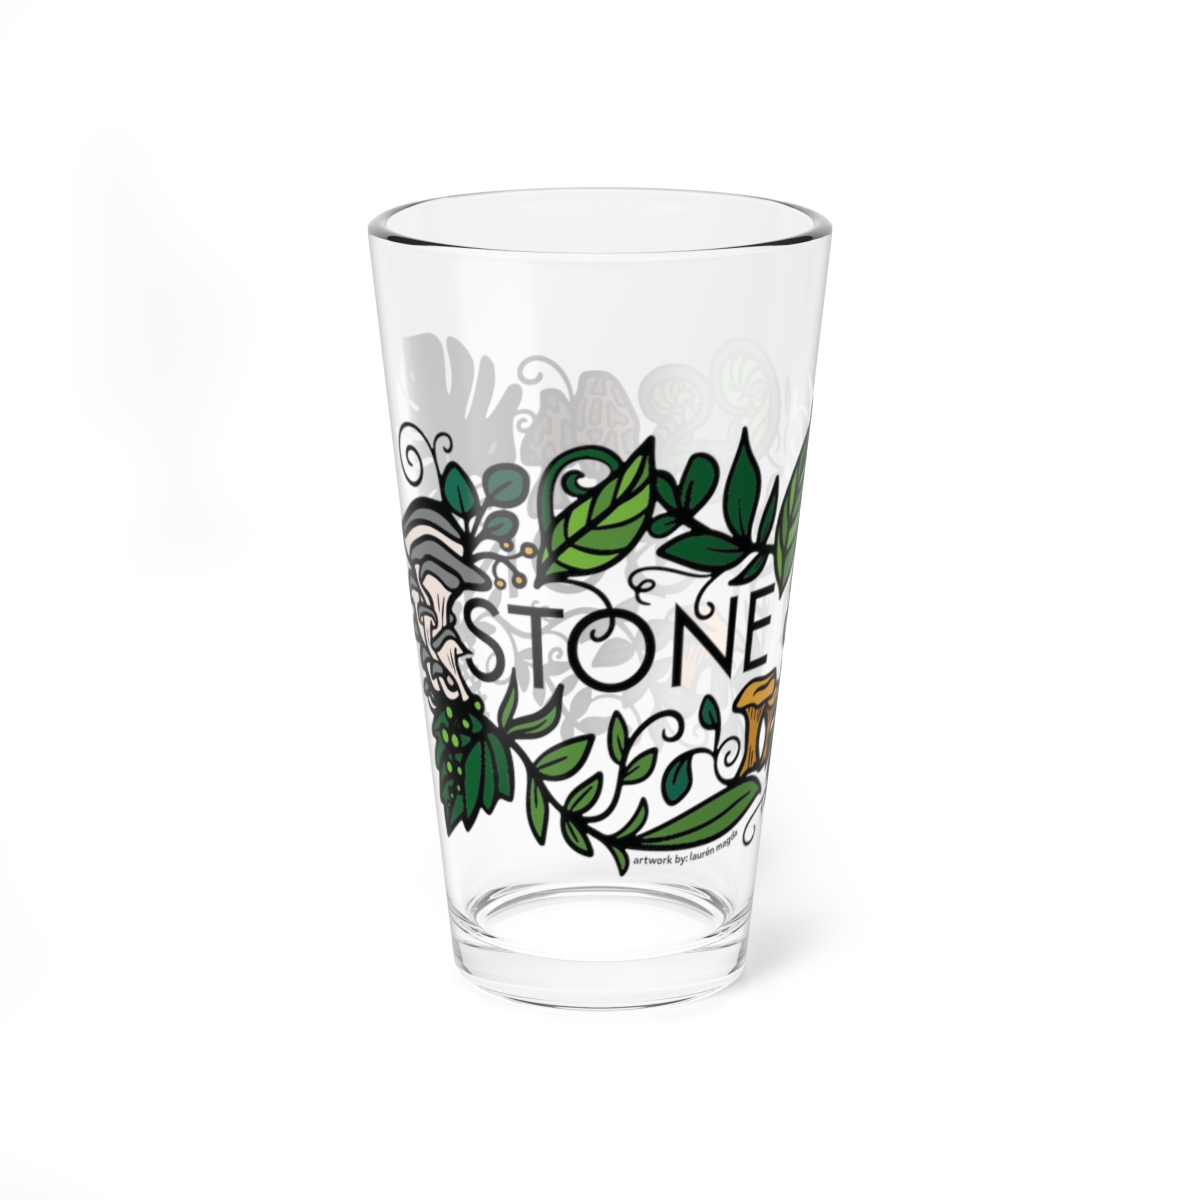 Stone & Spoon Pint Glass, 16oz product thumbnail image